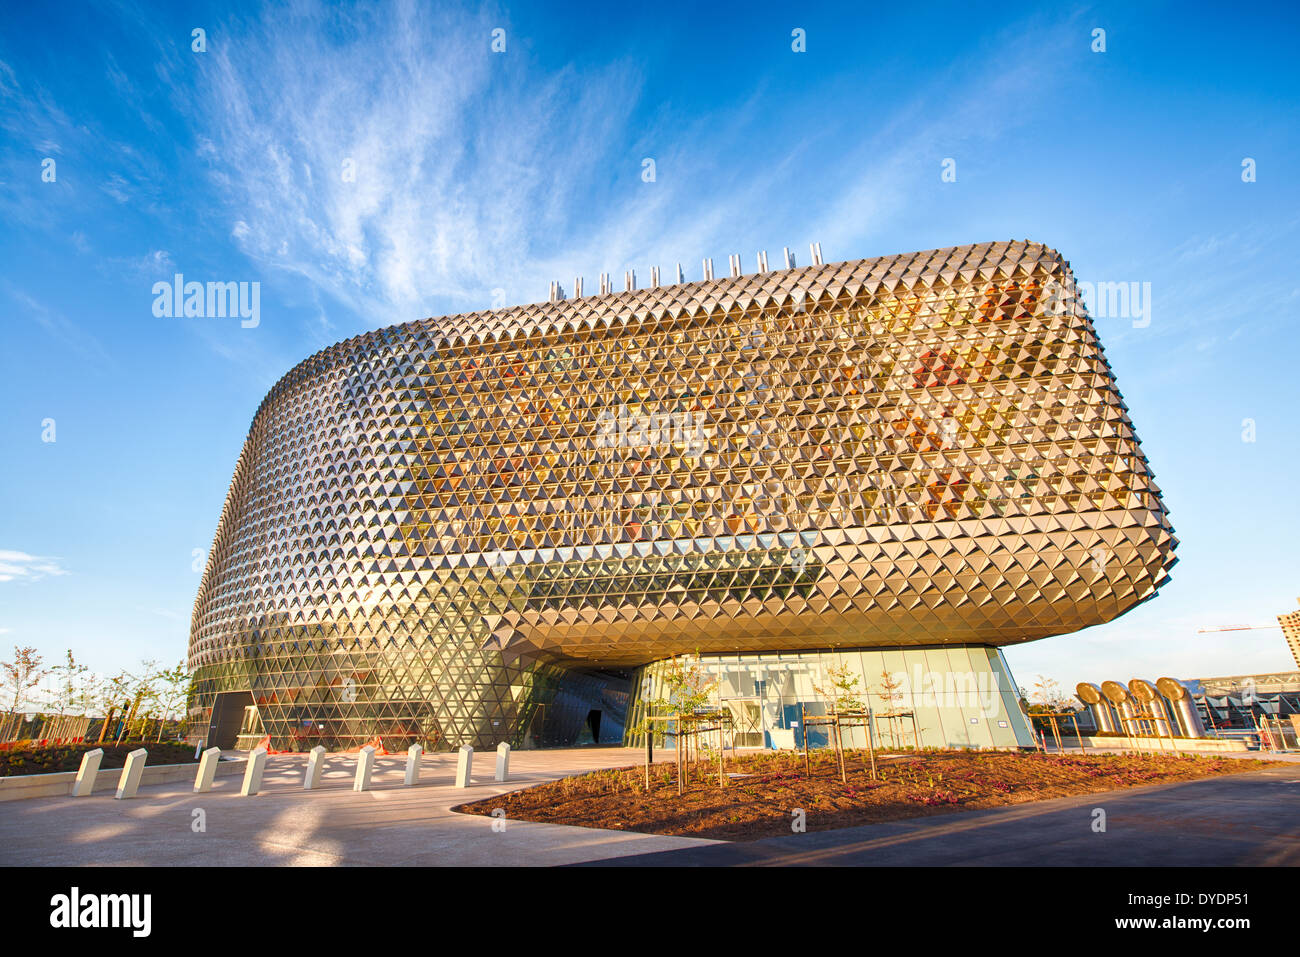 South Australian salute e istituto di ricerca medica SAHMRI costruzione di Adelaide Foto Stock